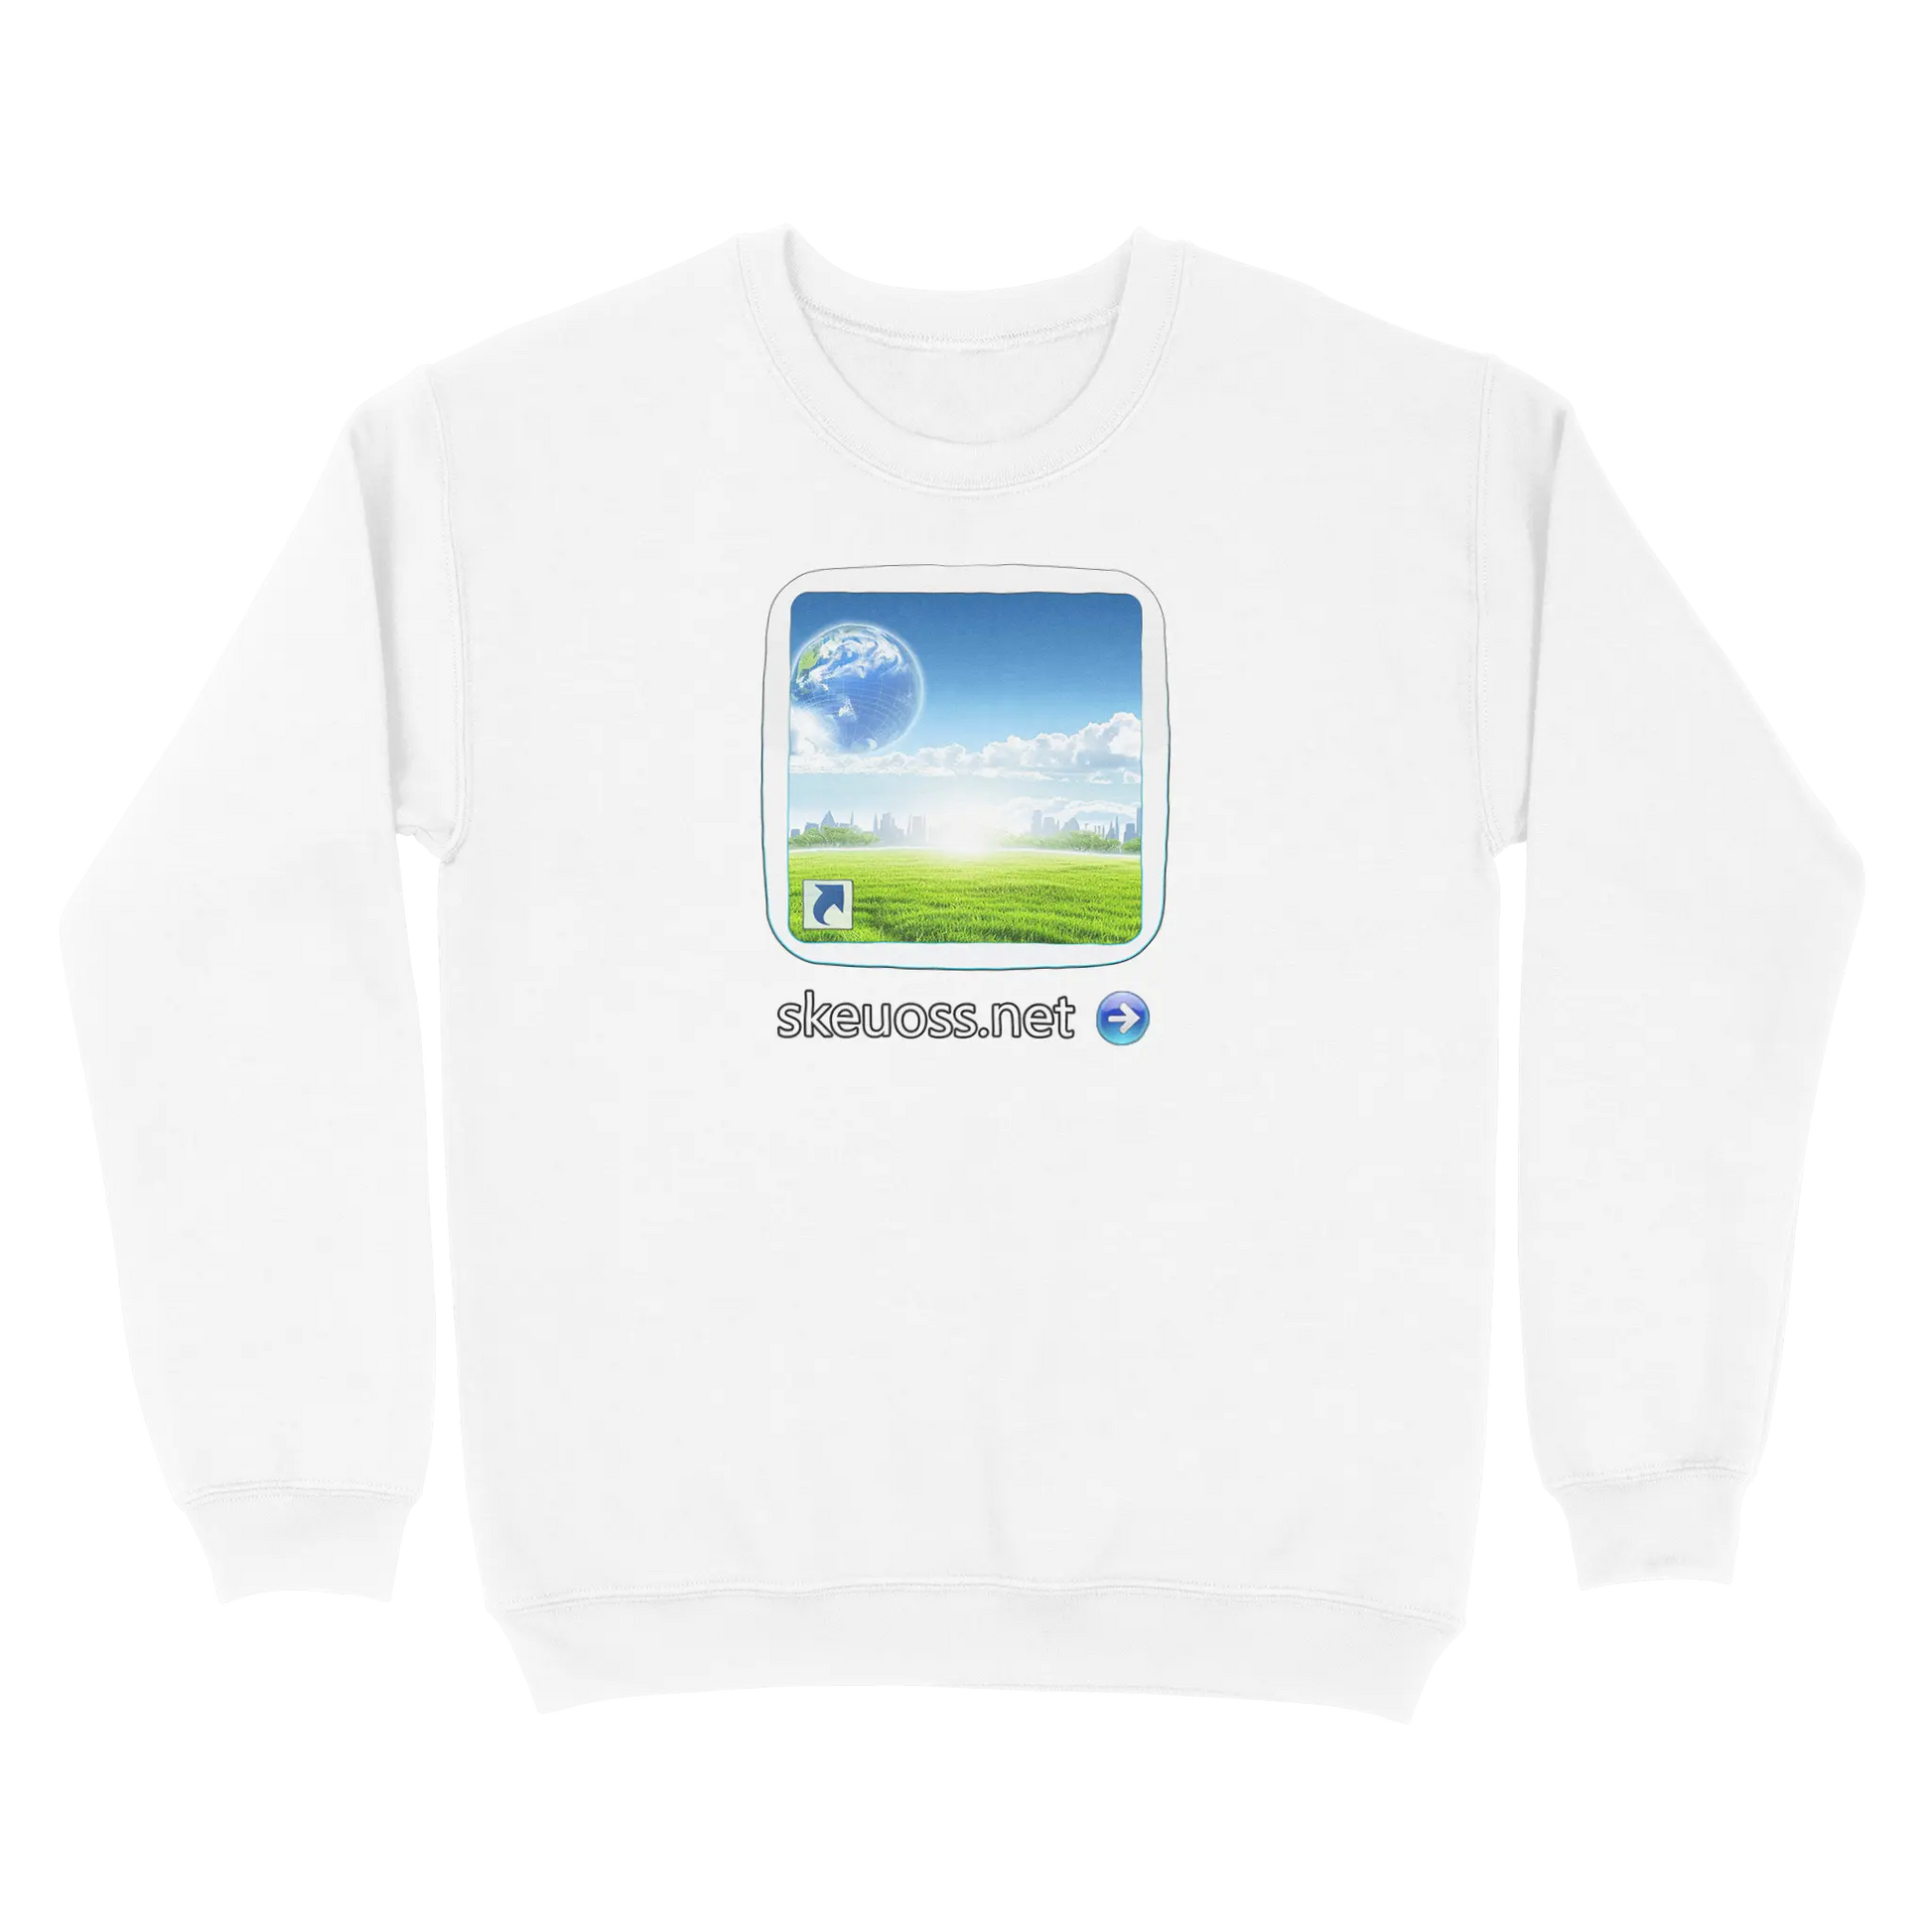 Frutiger Aero Sweatshirt - User Login Collection - User 317